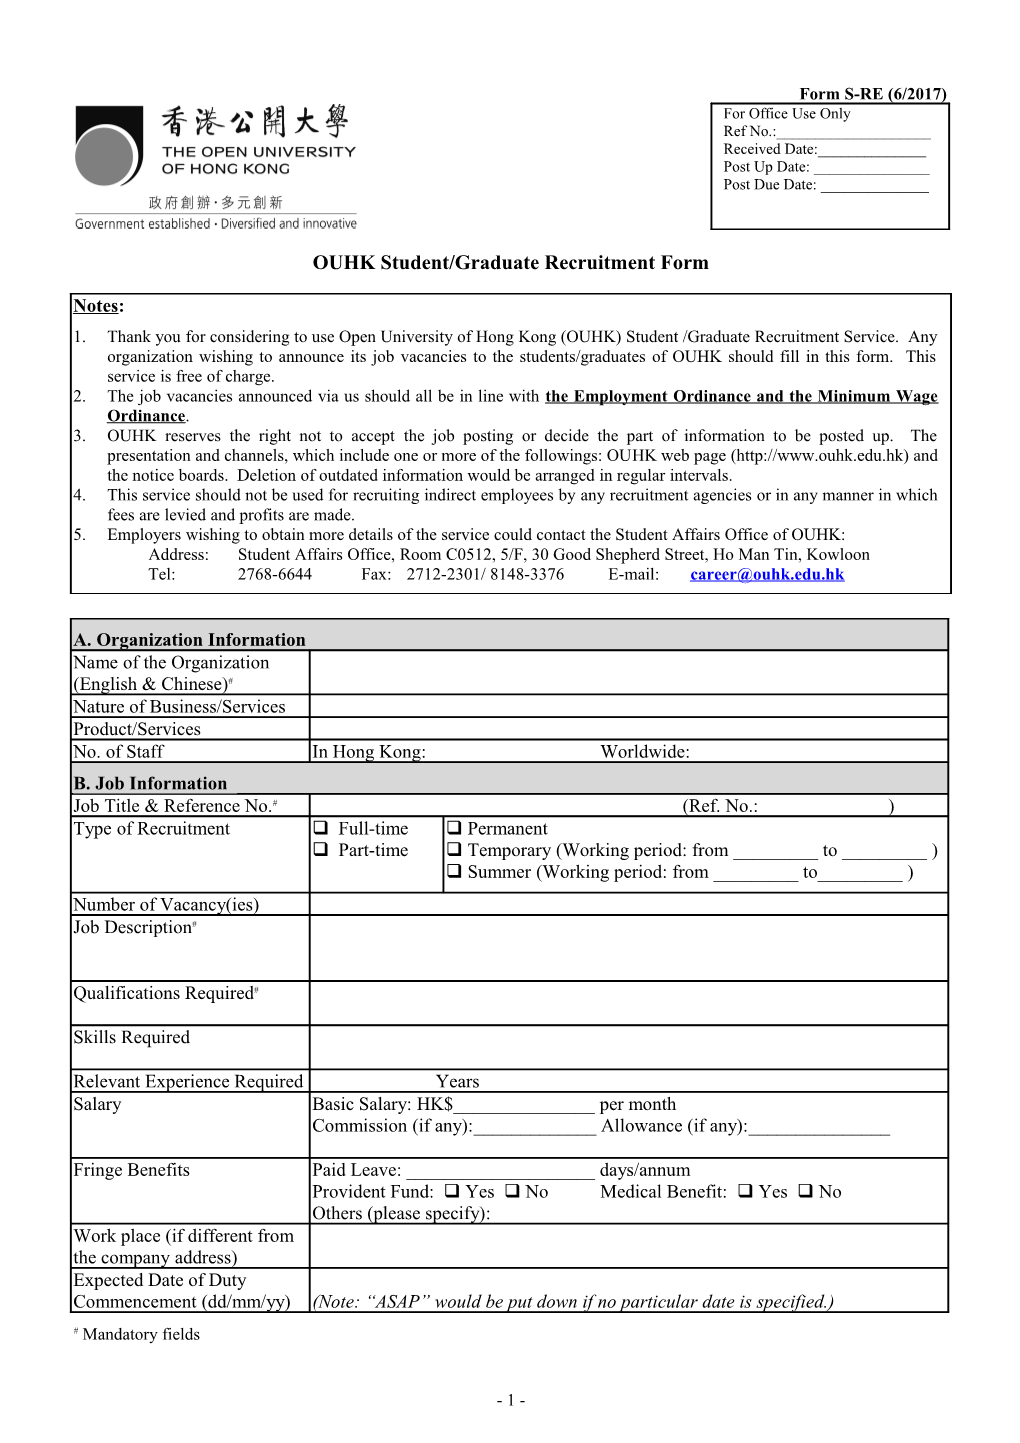 OUHK Student/Graduate Recruitment Form